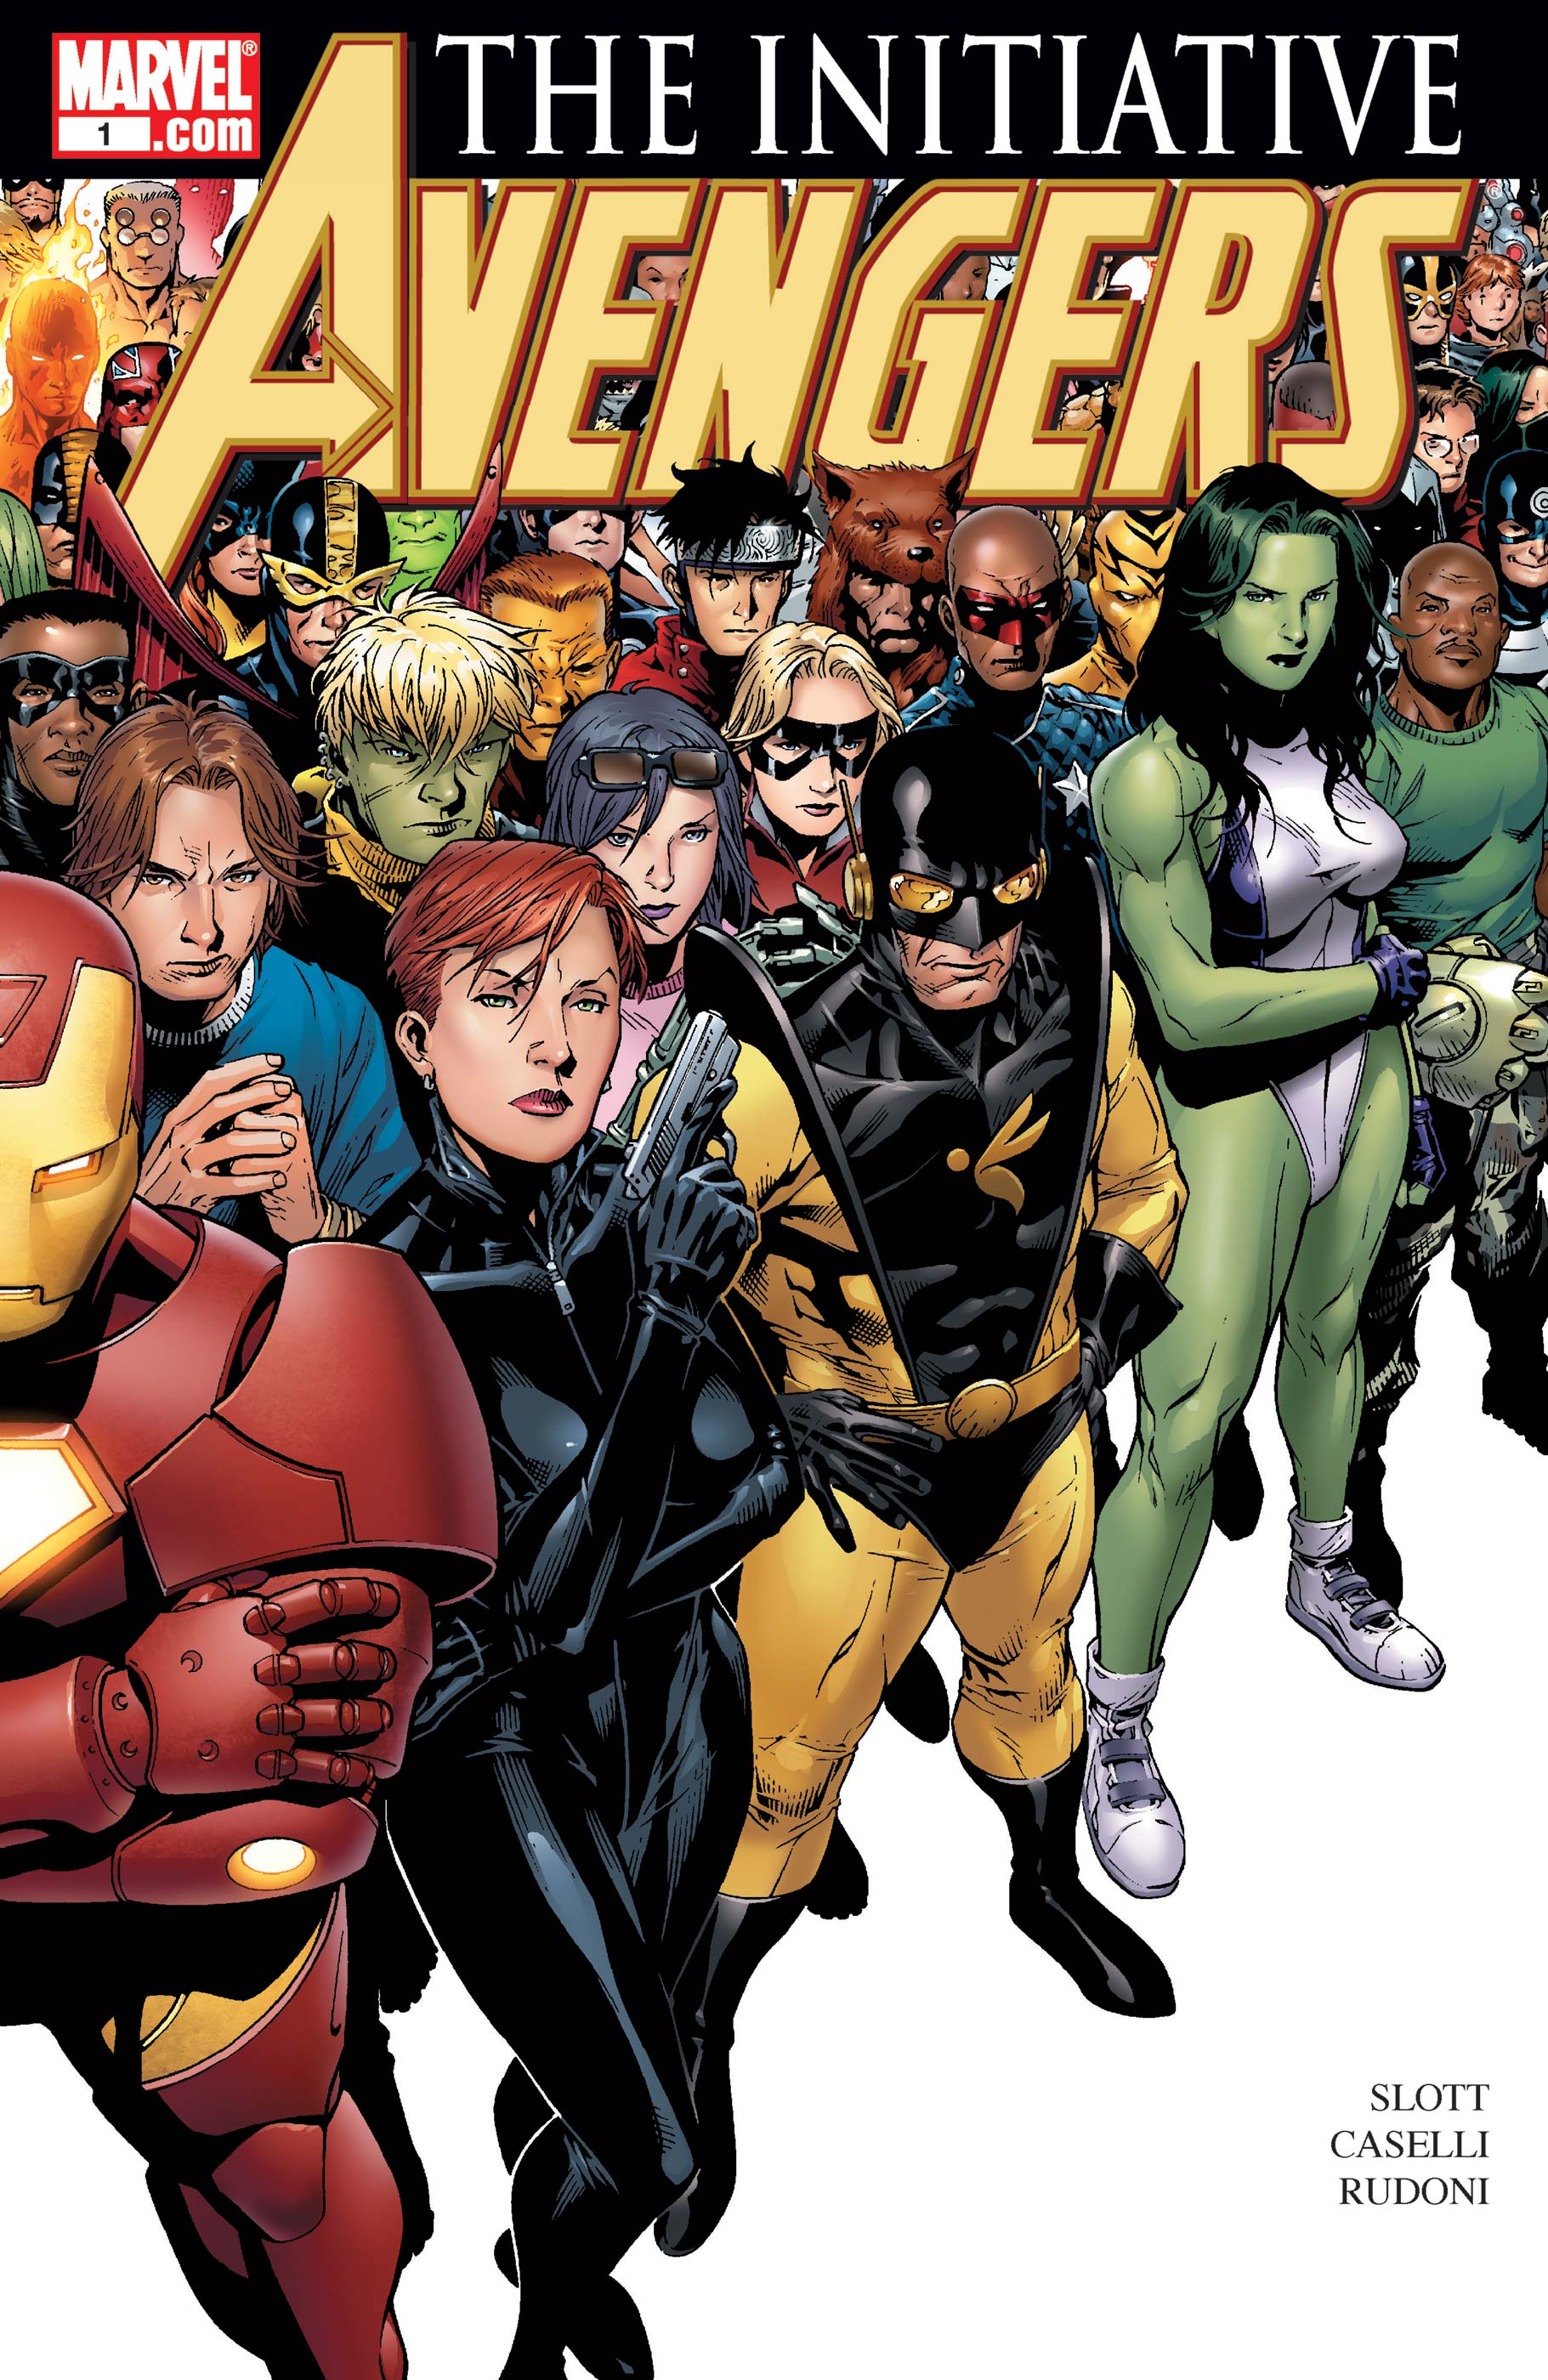 Avengers: The Initiative (2007) #1